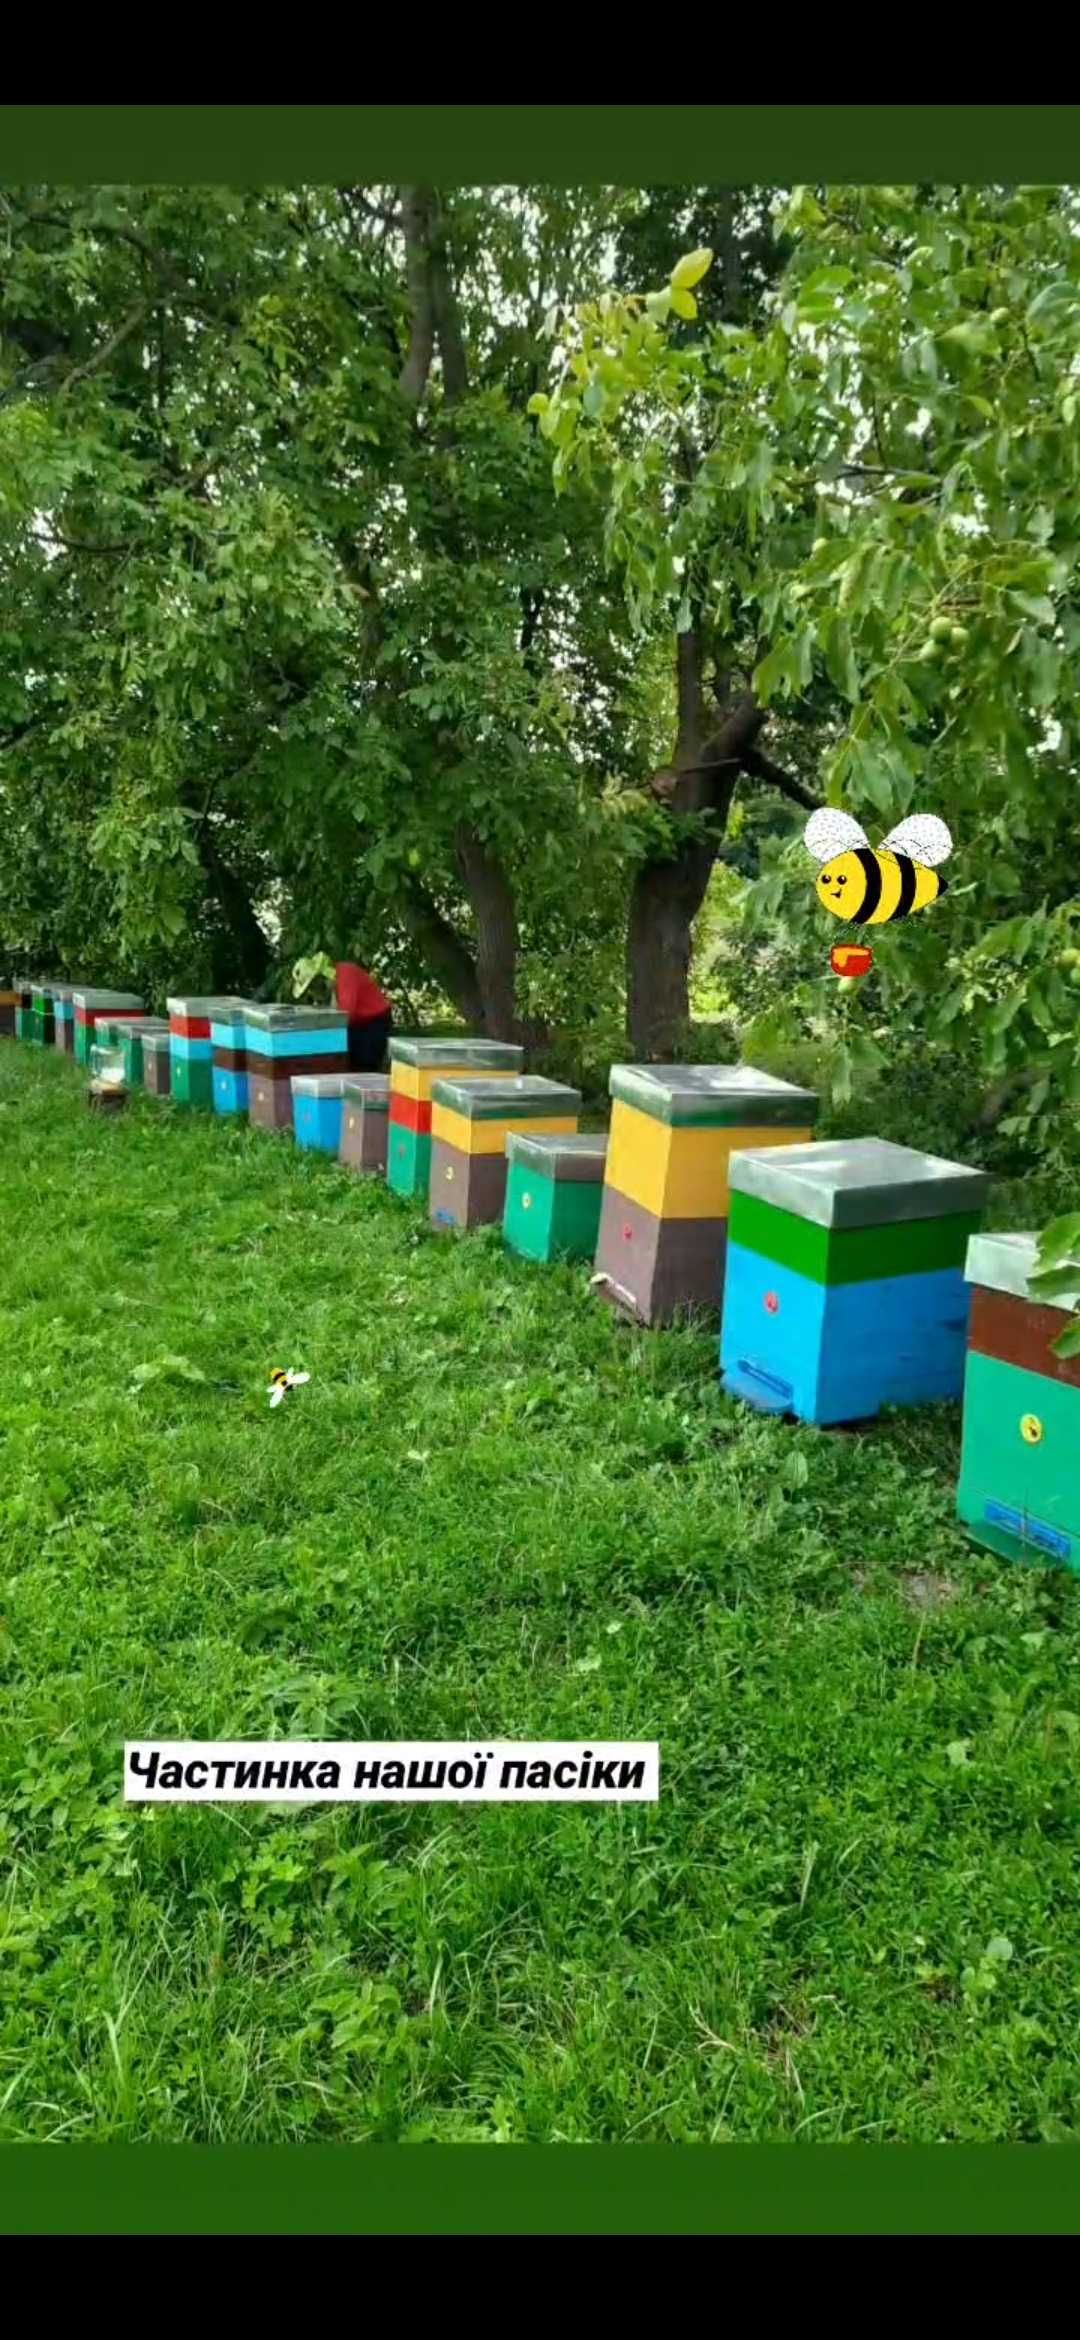 Продам бджолопакети породи Бакфаст